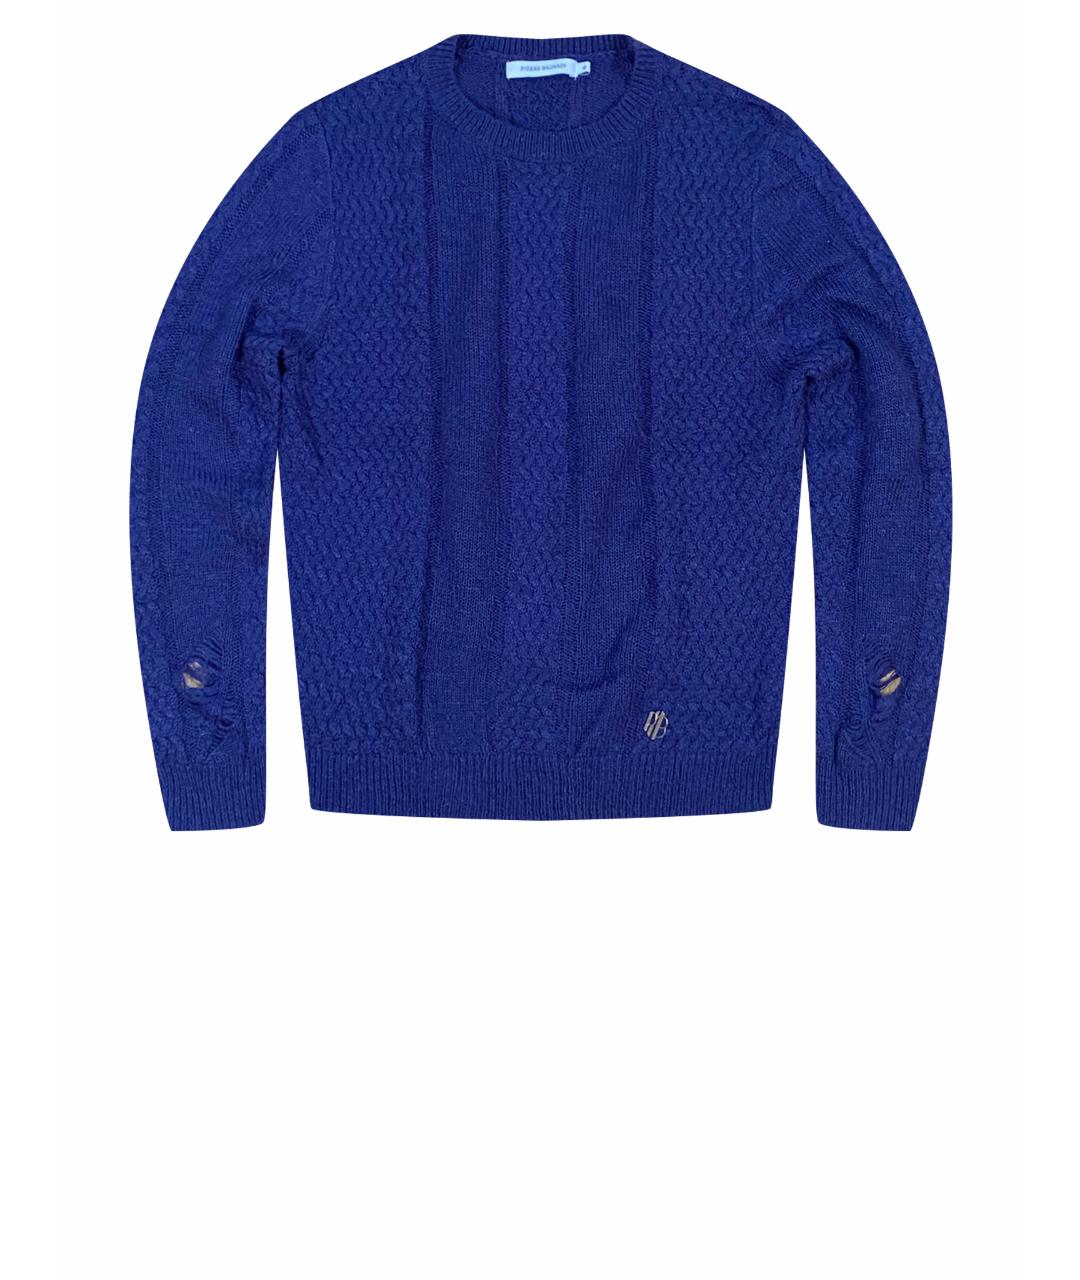 PIERRE BALMAIN Синий шерстяной джемпер / свитер, фото 1